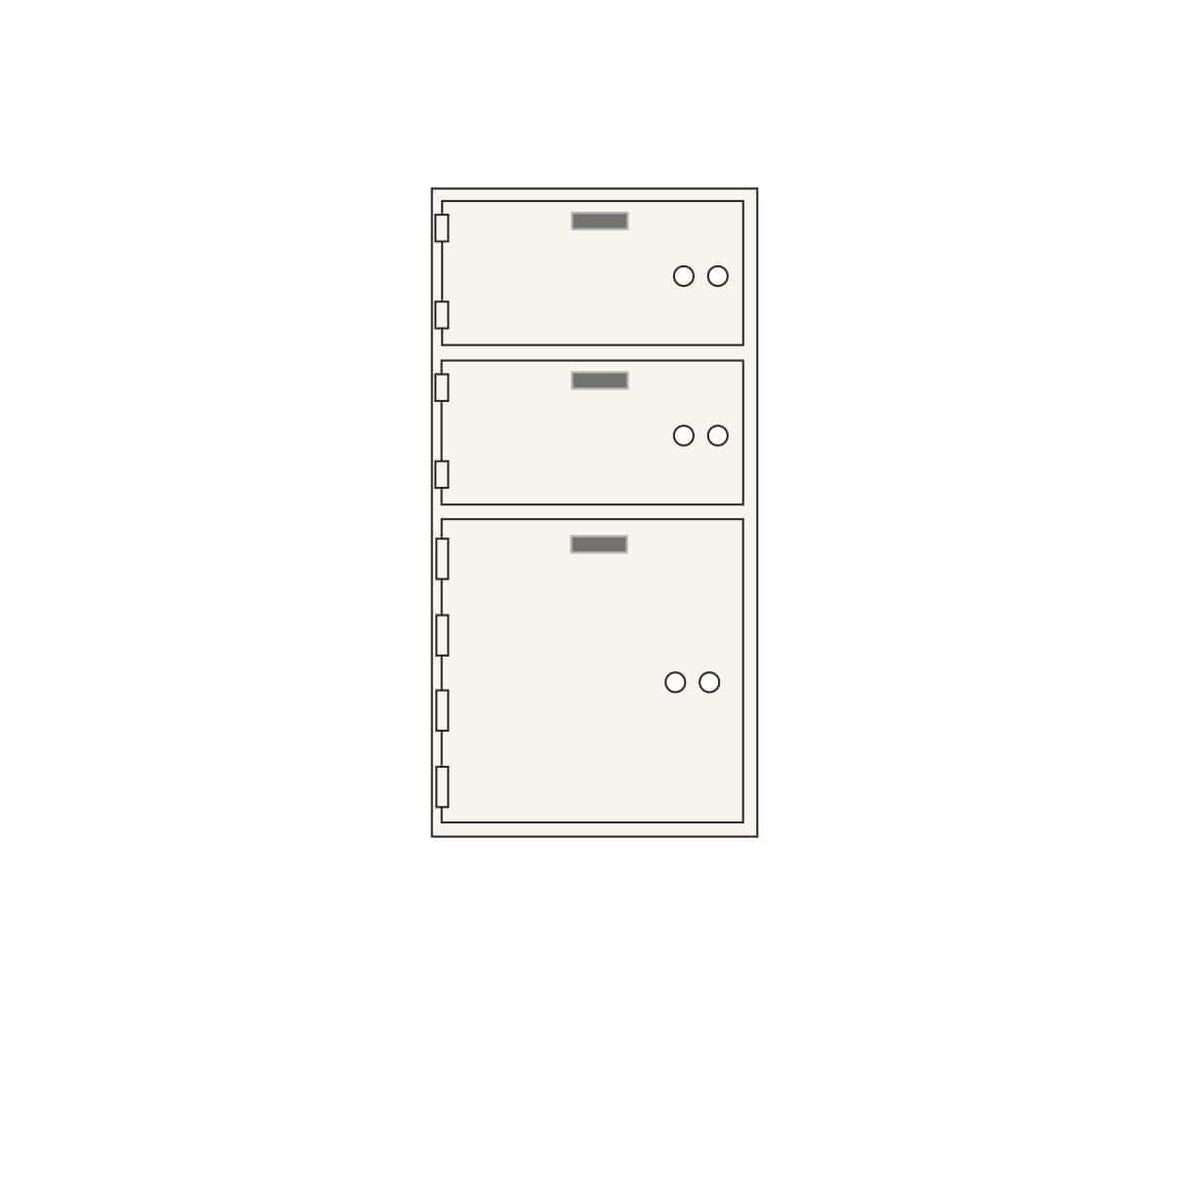 SoCal Bridgeman AXN-3 Modular Depository Safe | 2 x [5&quot;x10&quot;] + 1 x [10&quot;x10&quot;] Deposit Boxes